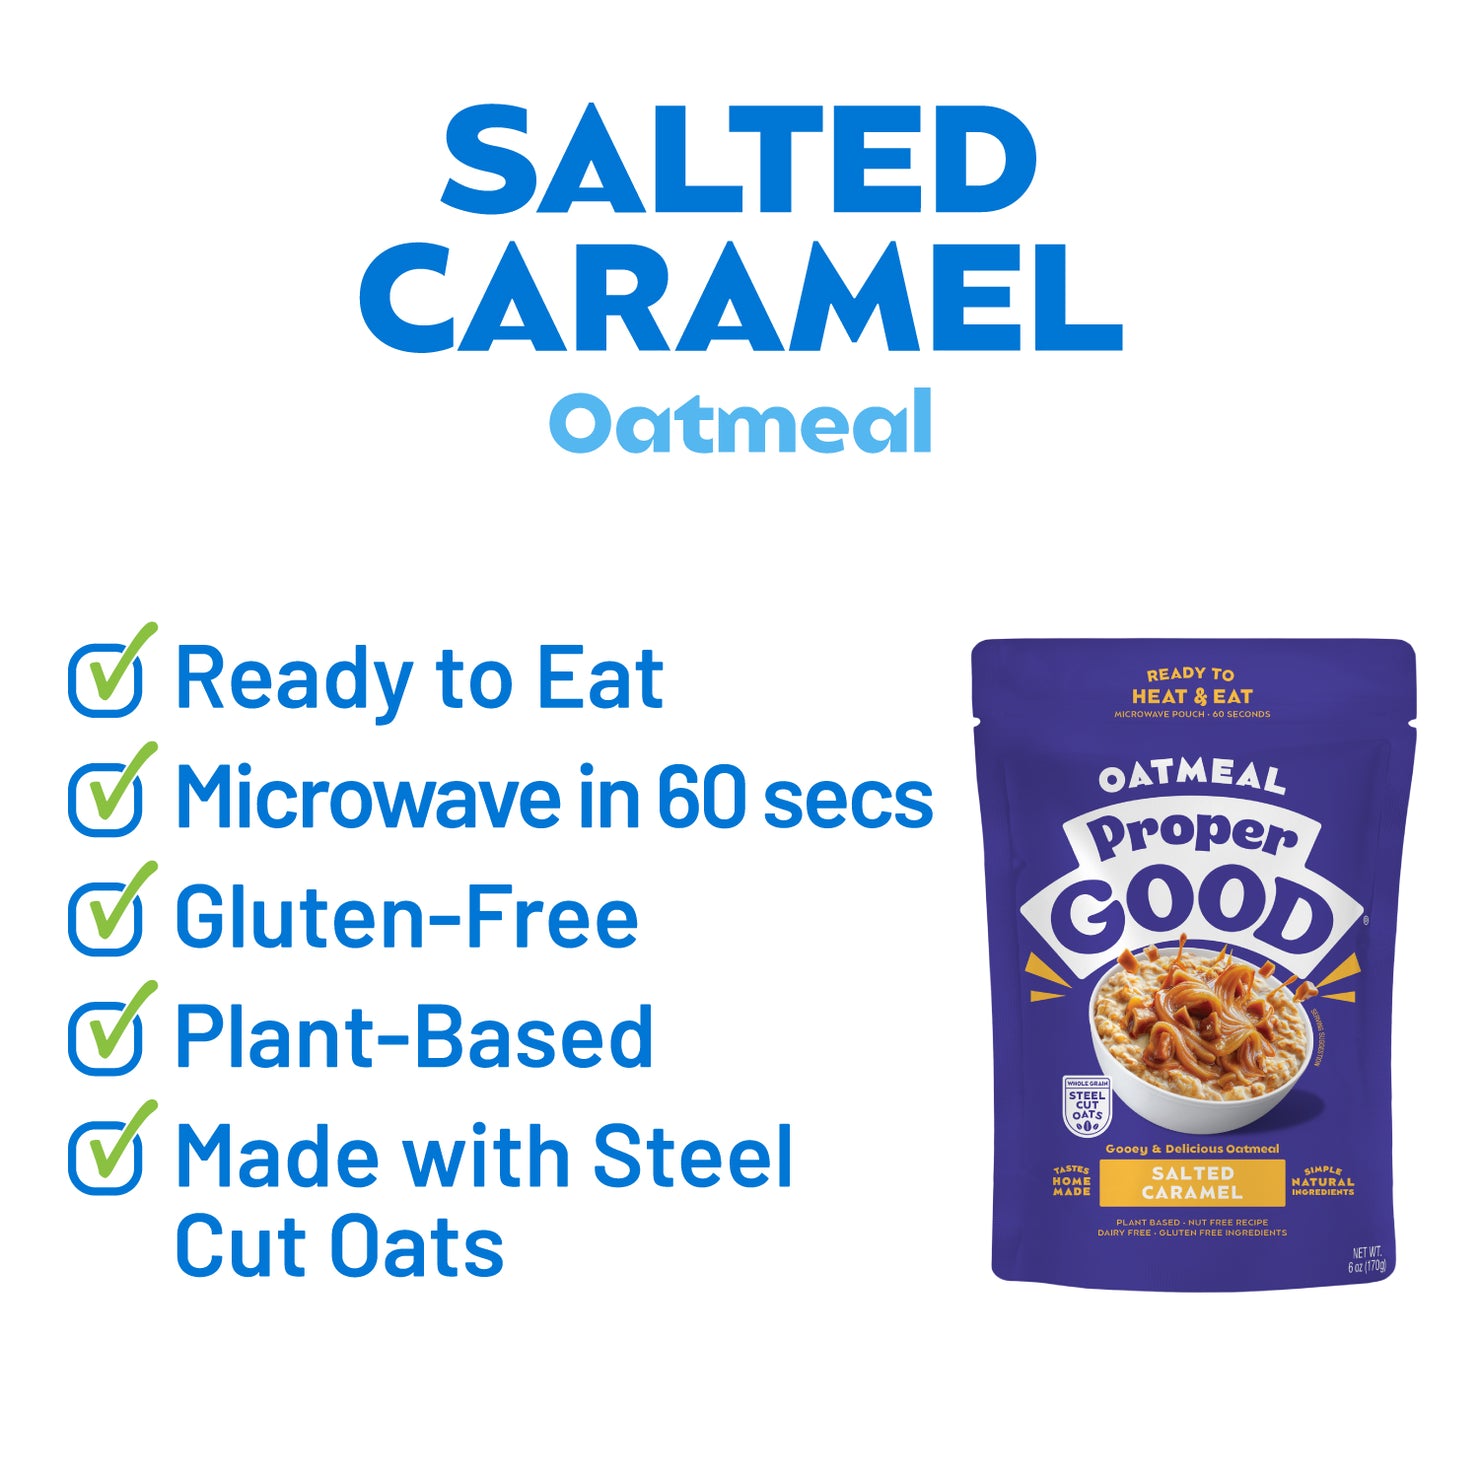 Salted Caramel Oatmeal Key Points - Eat Proper Good